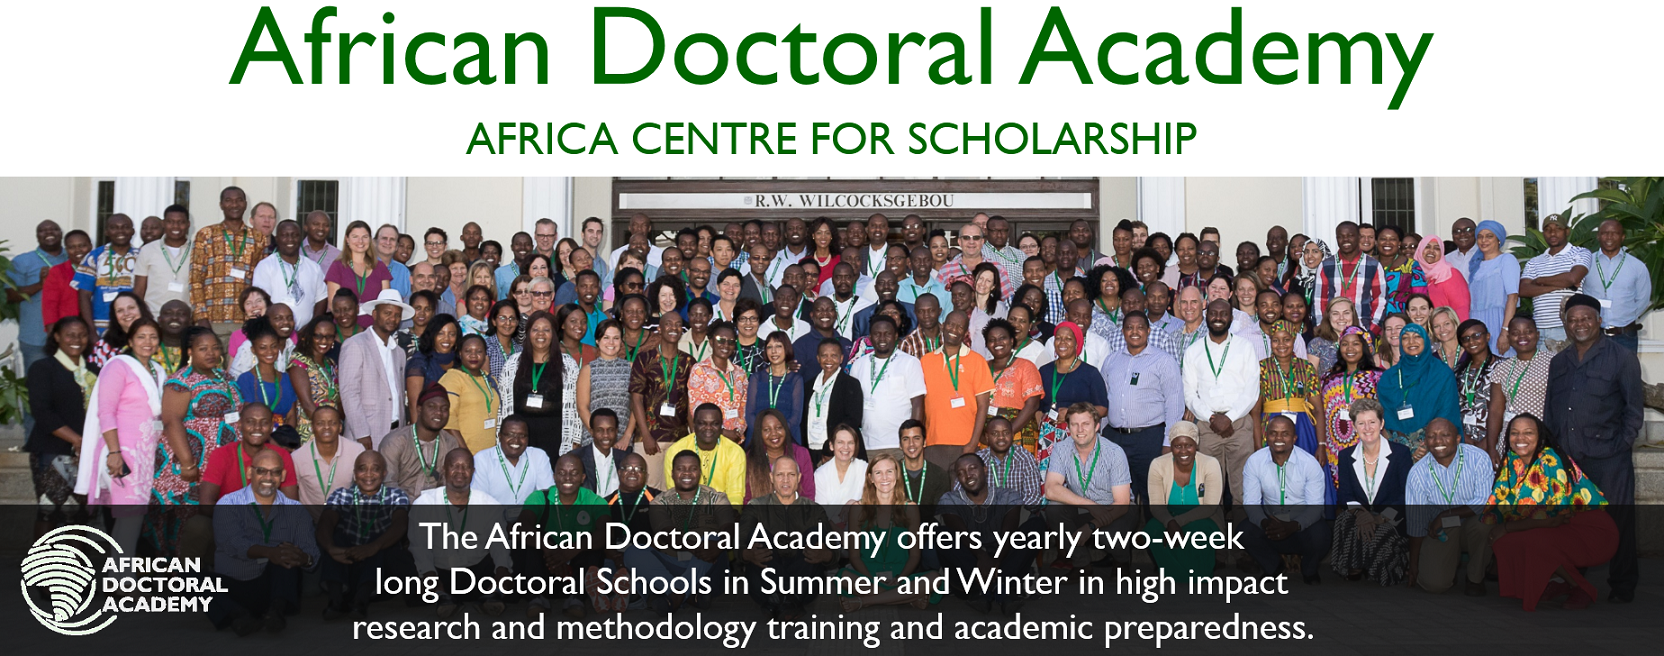 African Doctoral Academy (ADA) Summer School